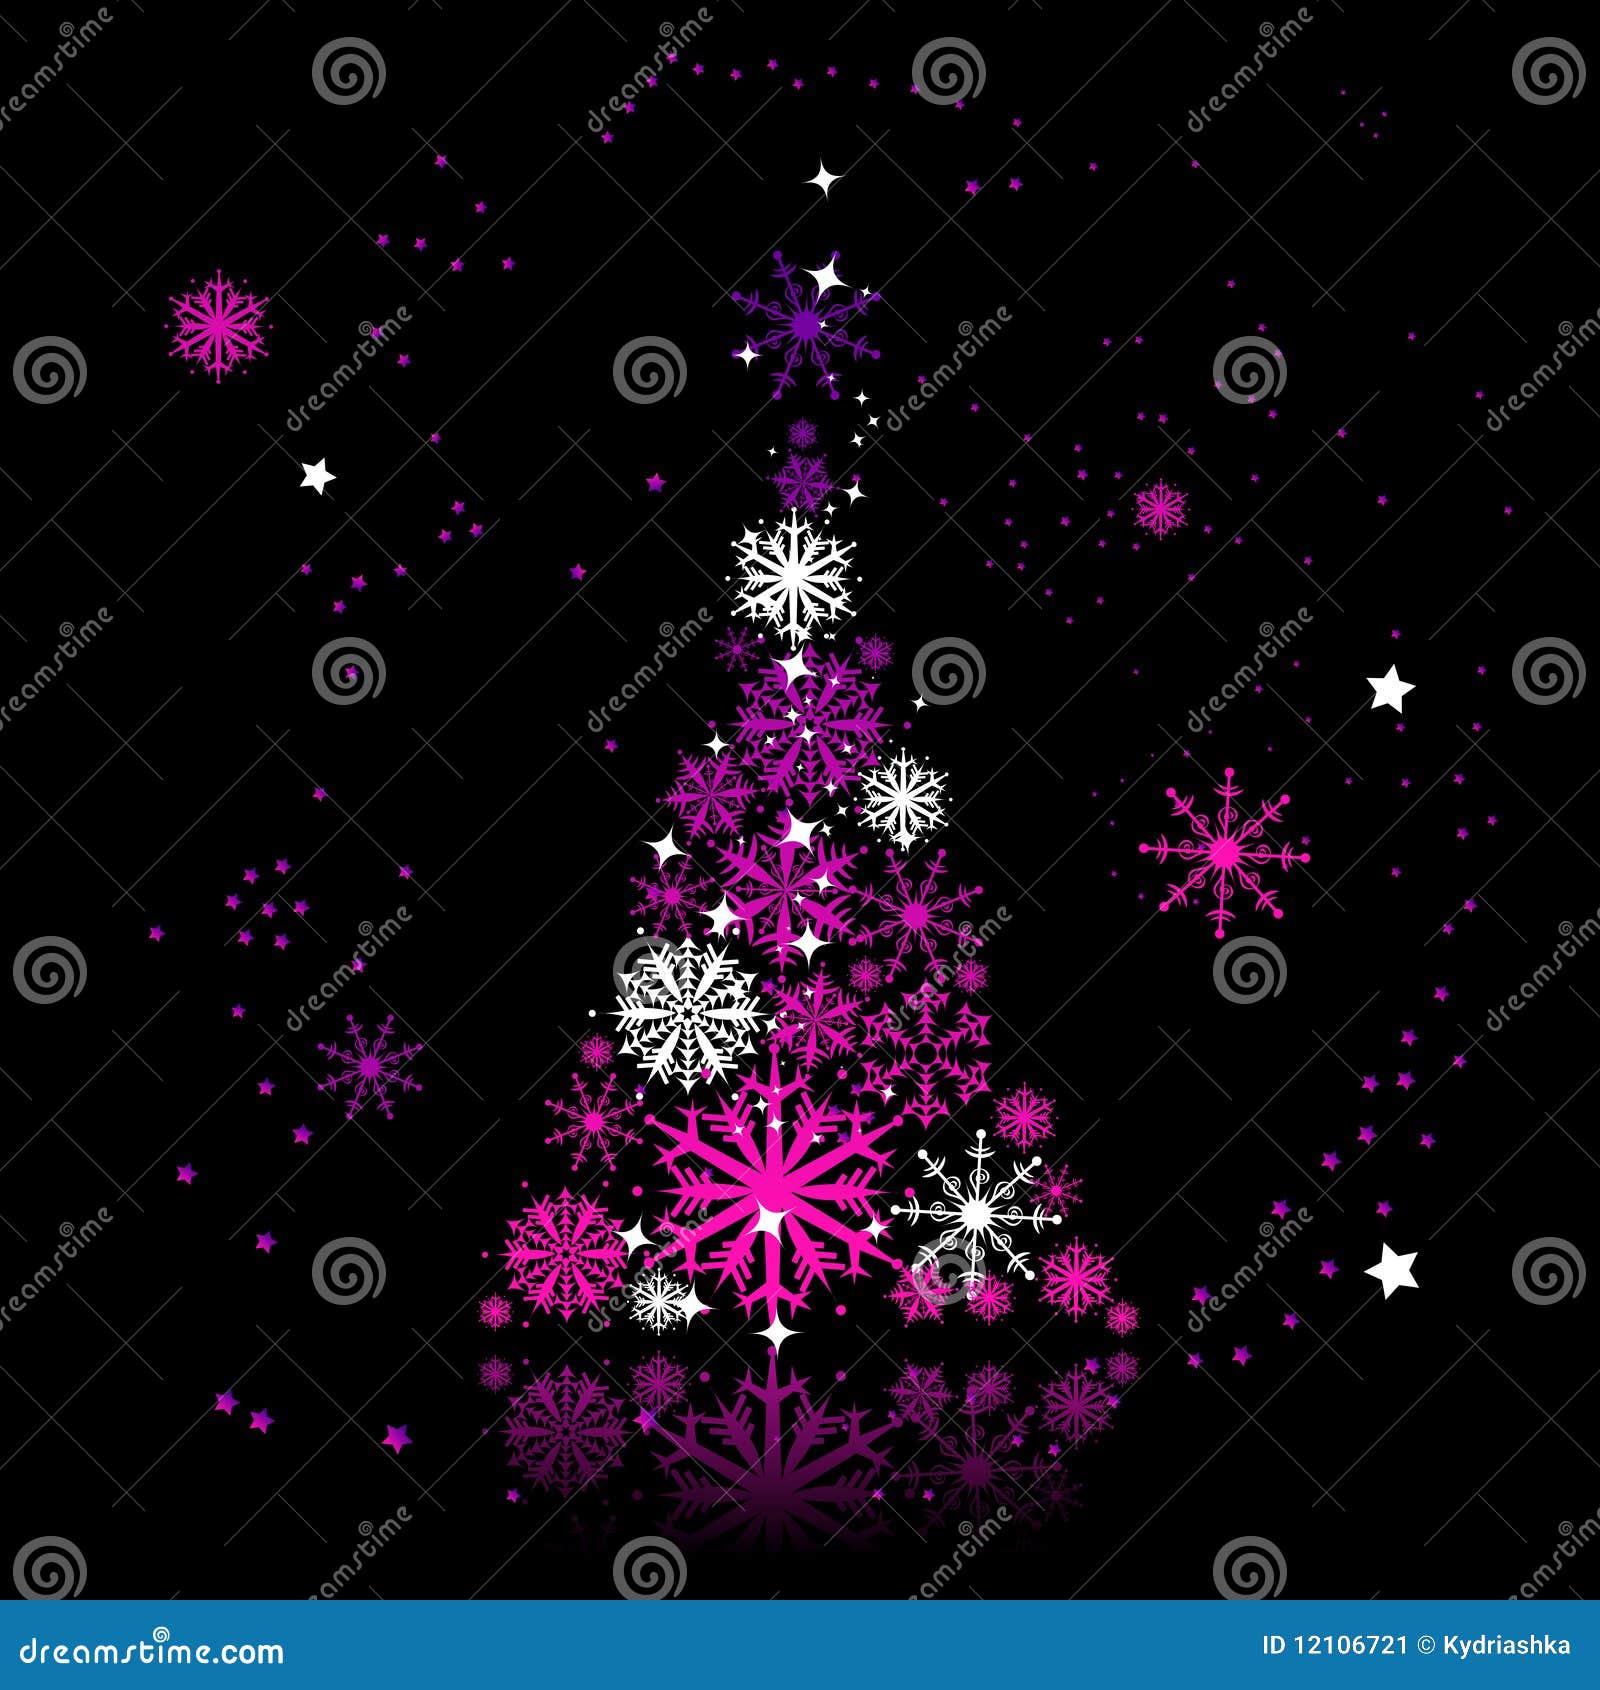 More similar stock images of ` Christmas tree beautiful `